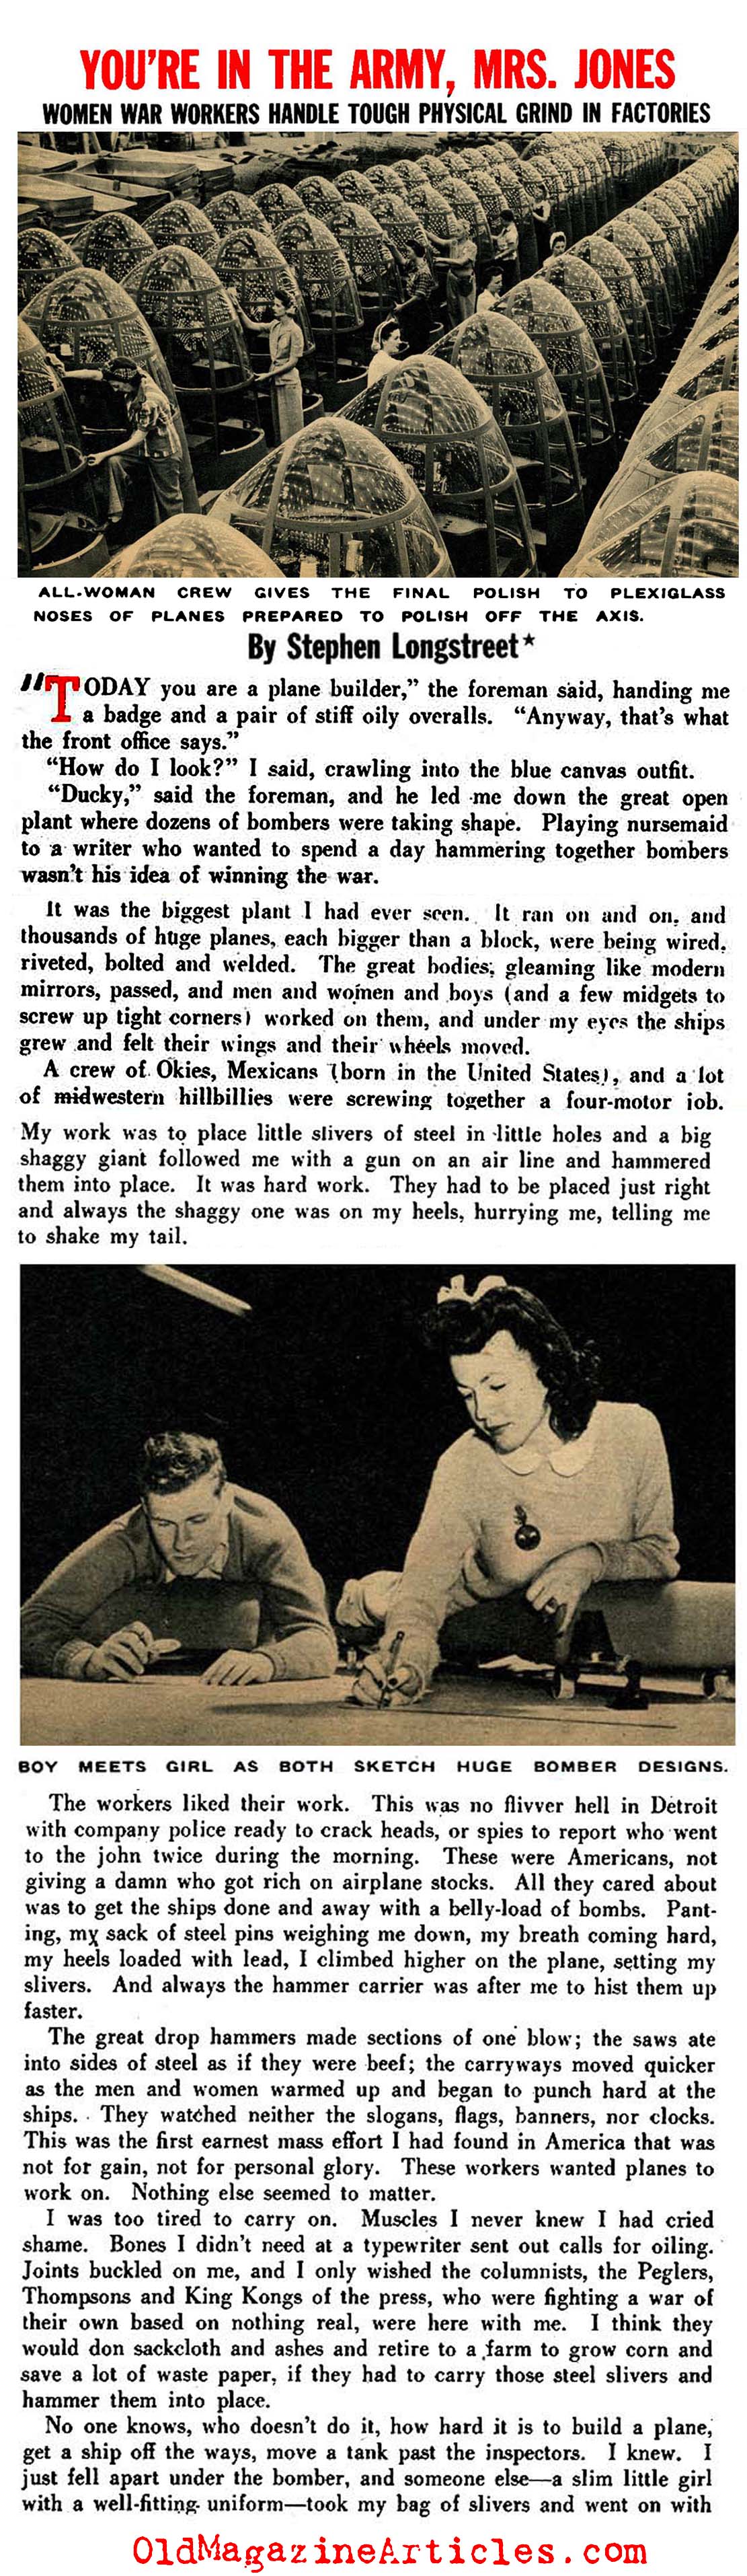 Women War Workers (Pic Magazine, 1943)